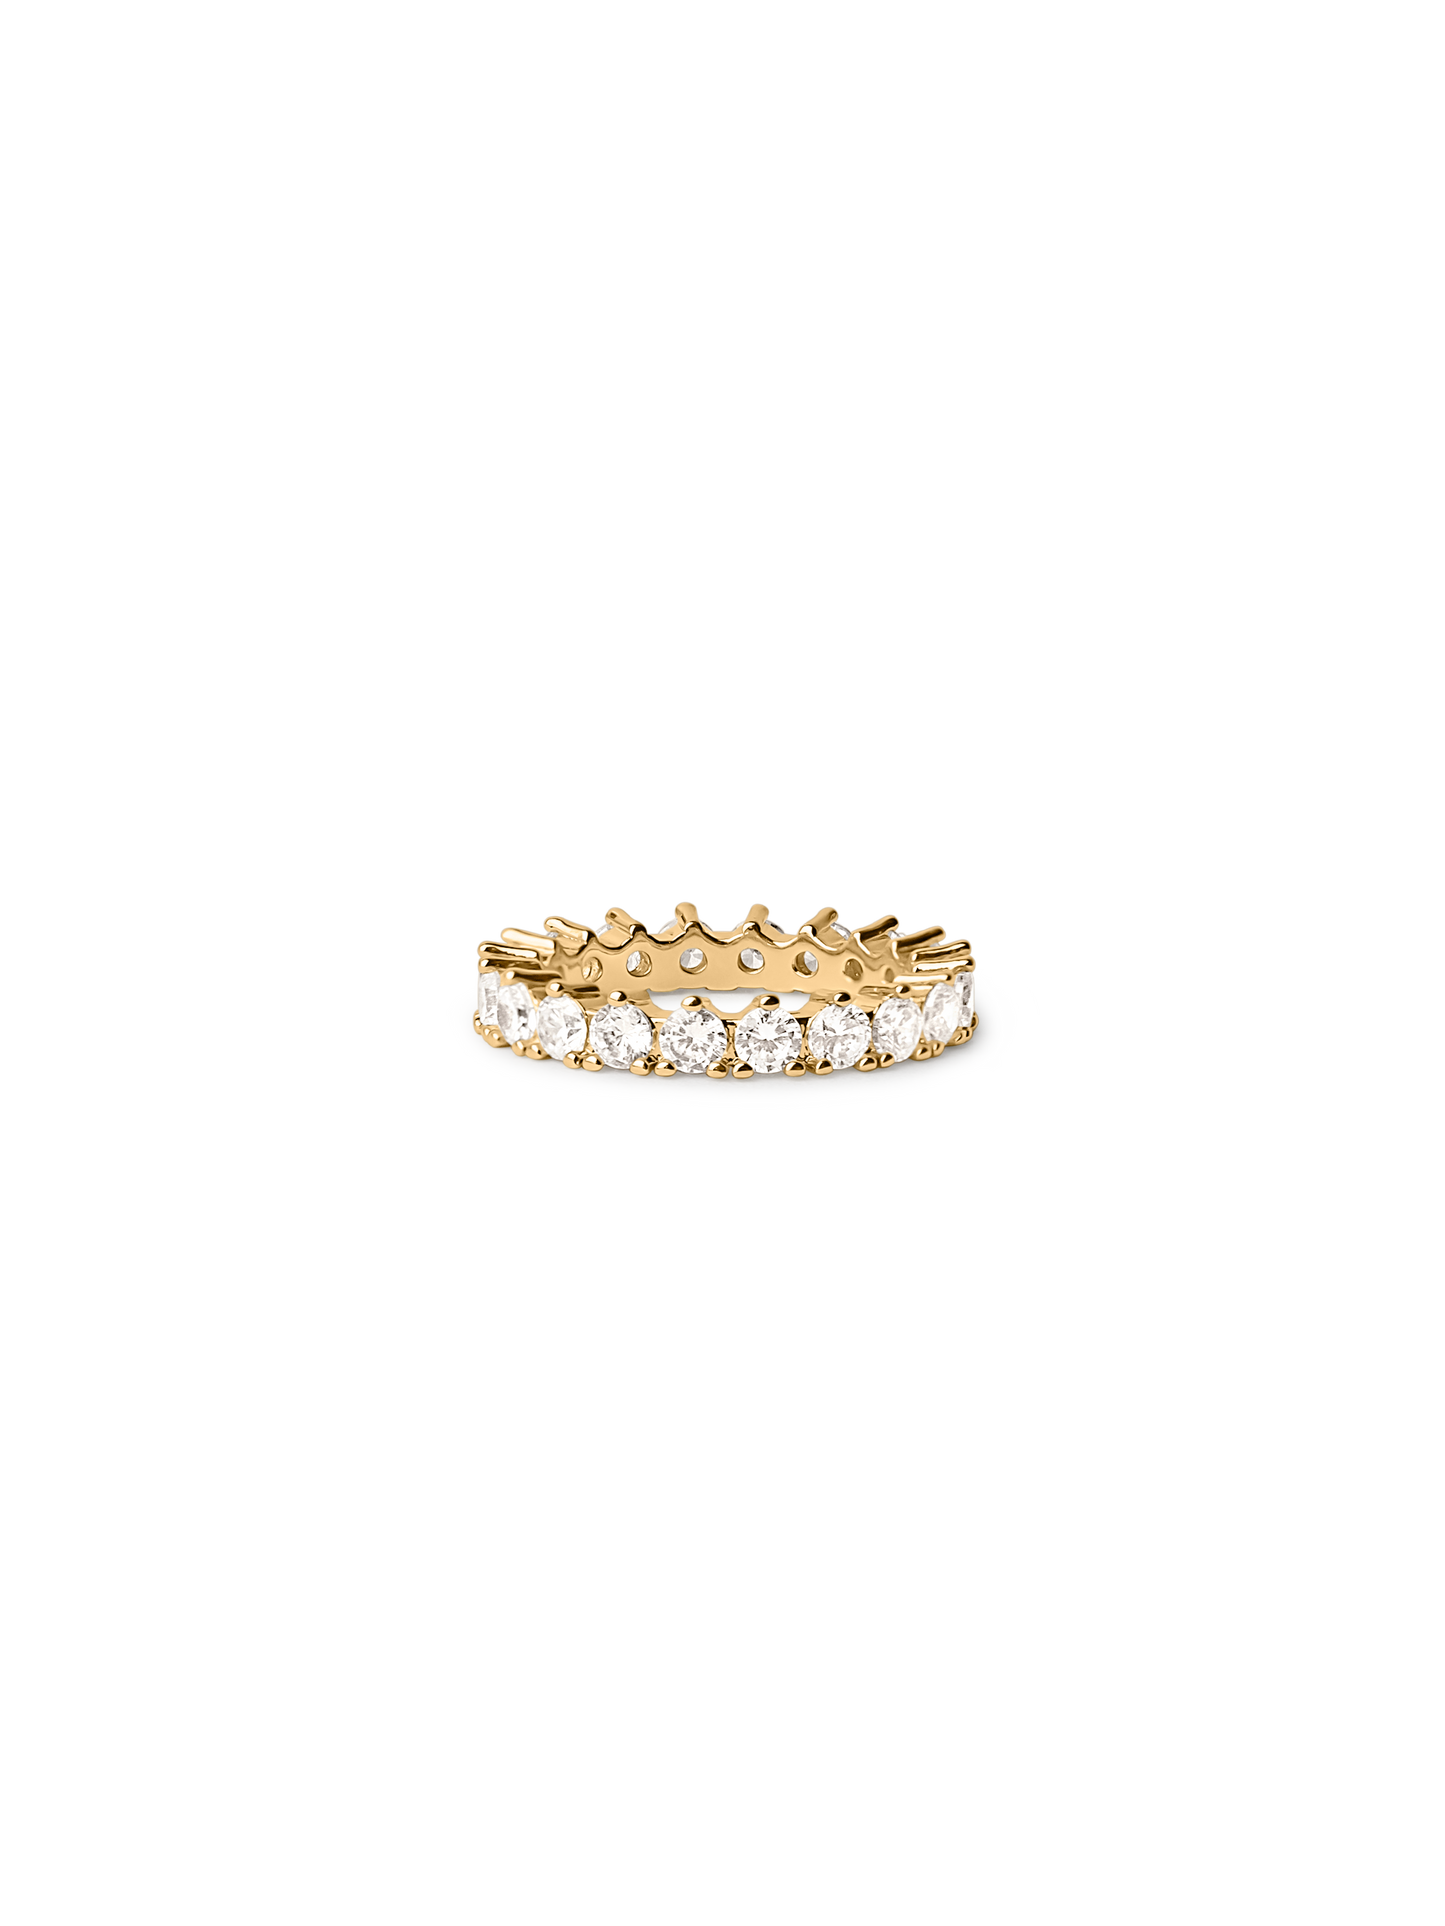 Ivy Diamond Ring by Felicia Wedin, 18k gold plated brass